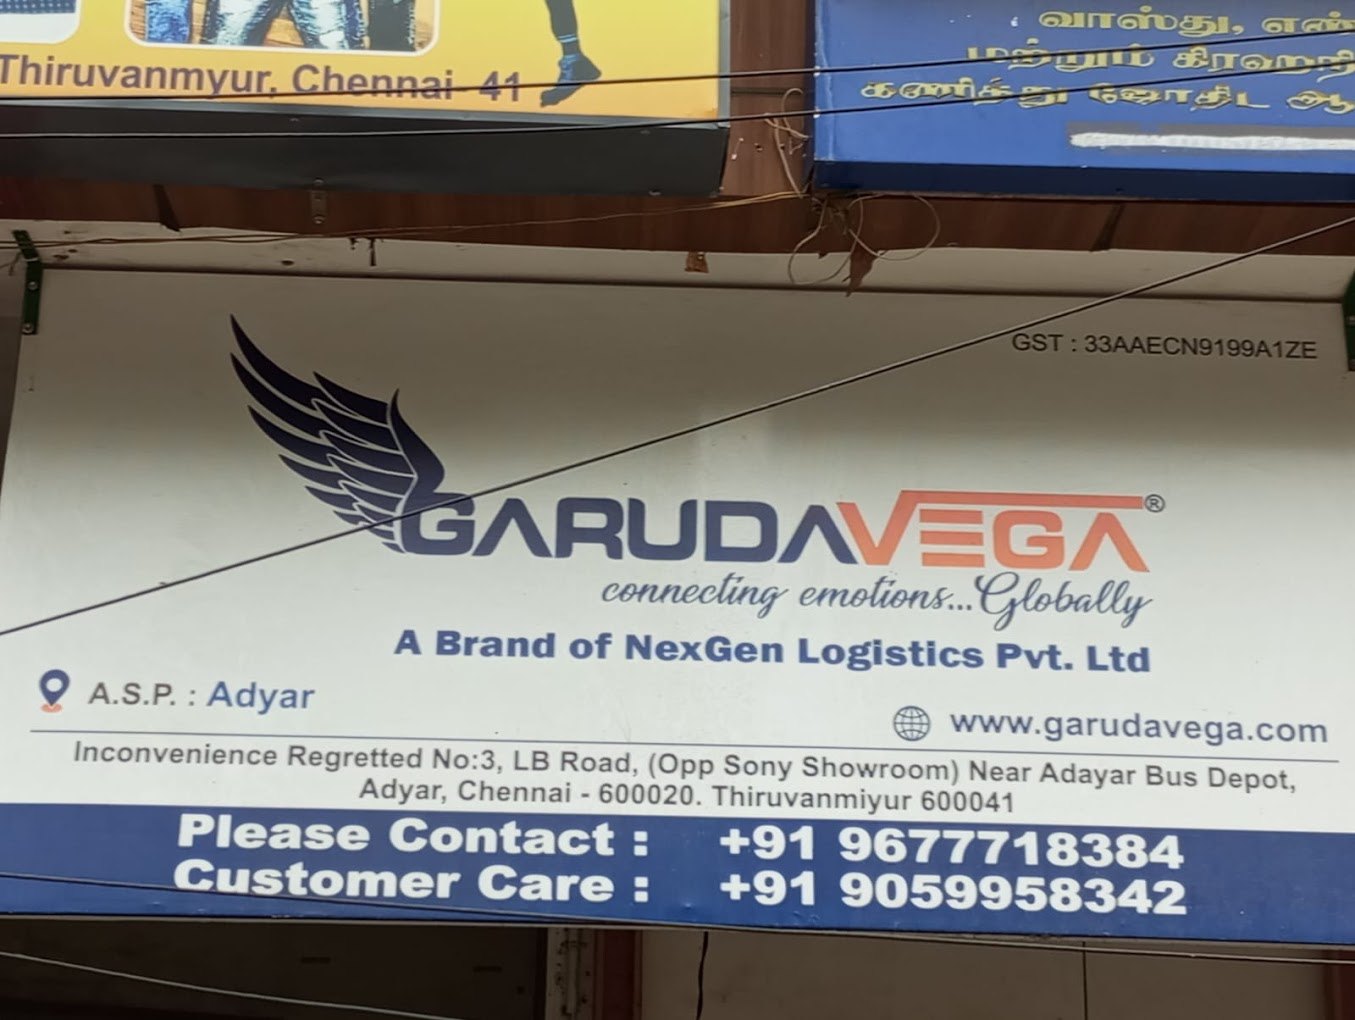 GarudaVega International Courier Service in Chennai Adyar